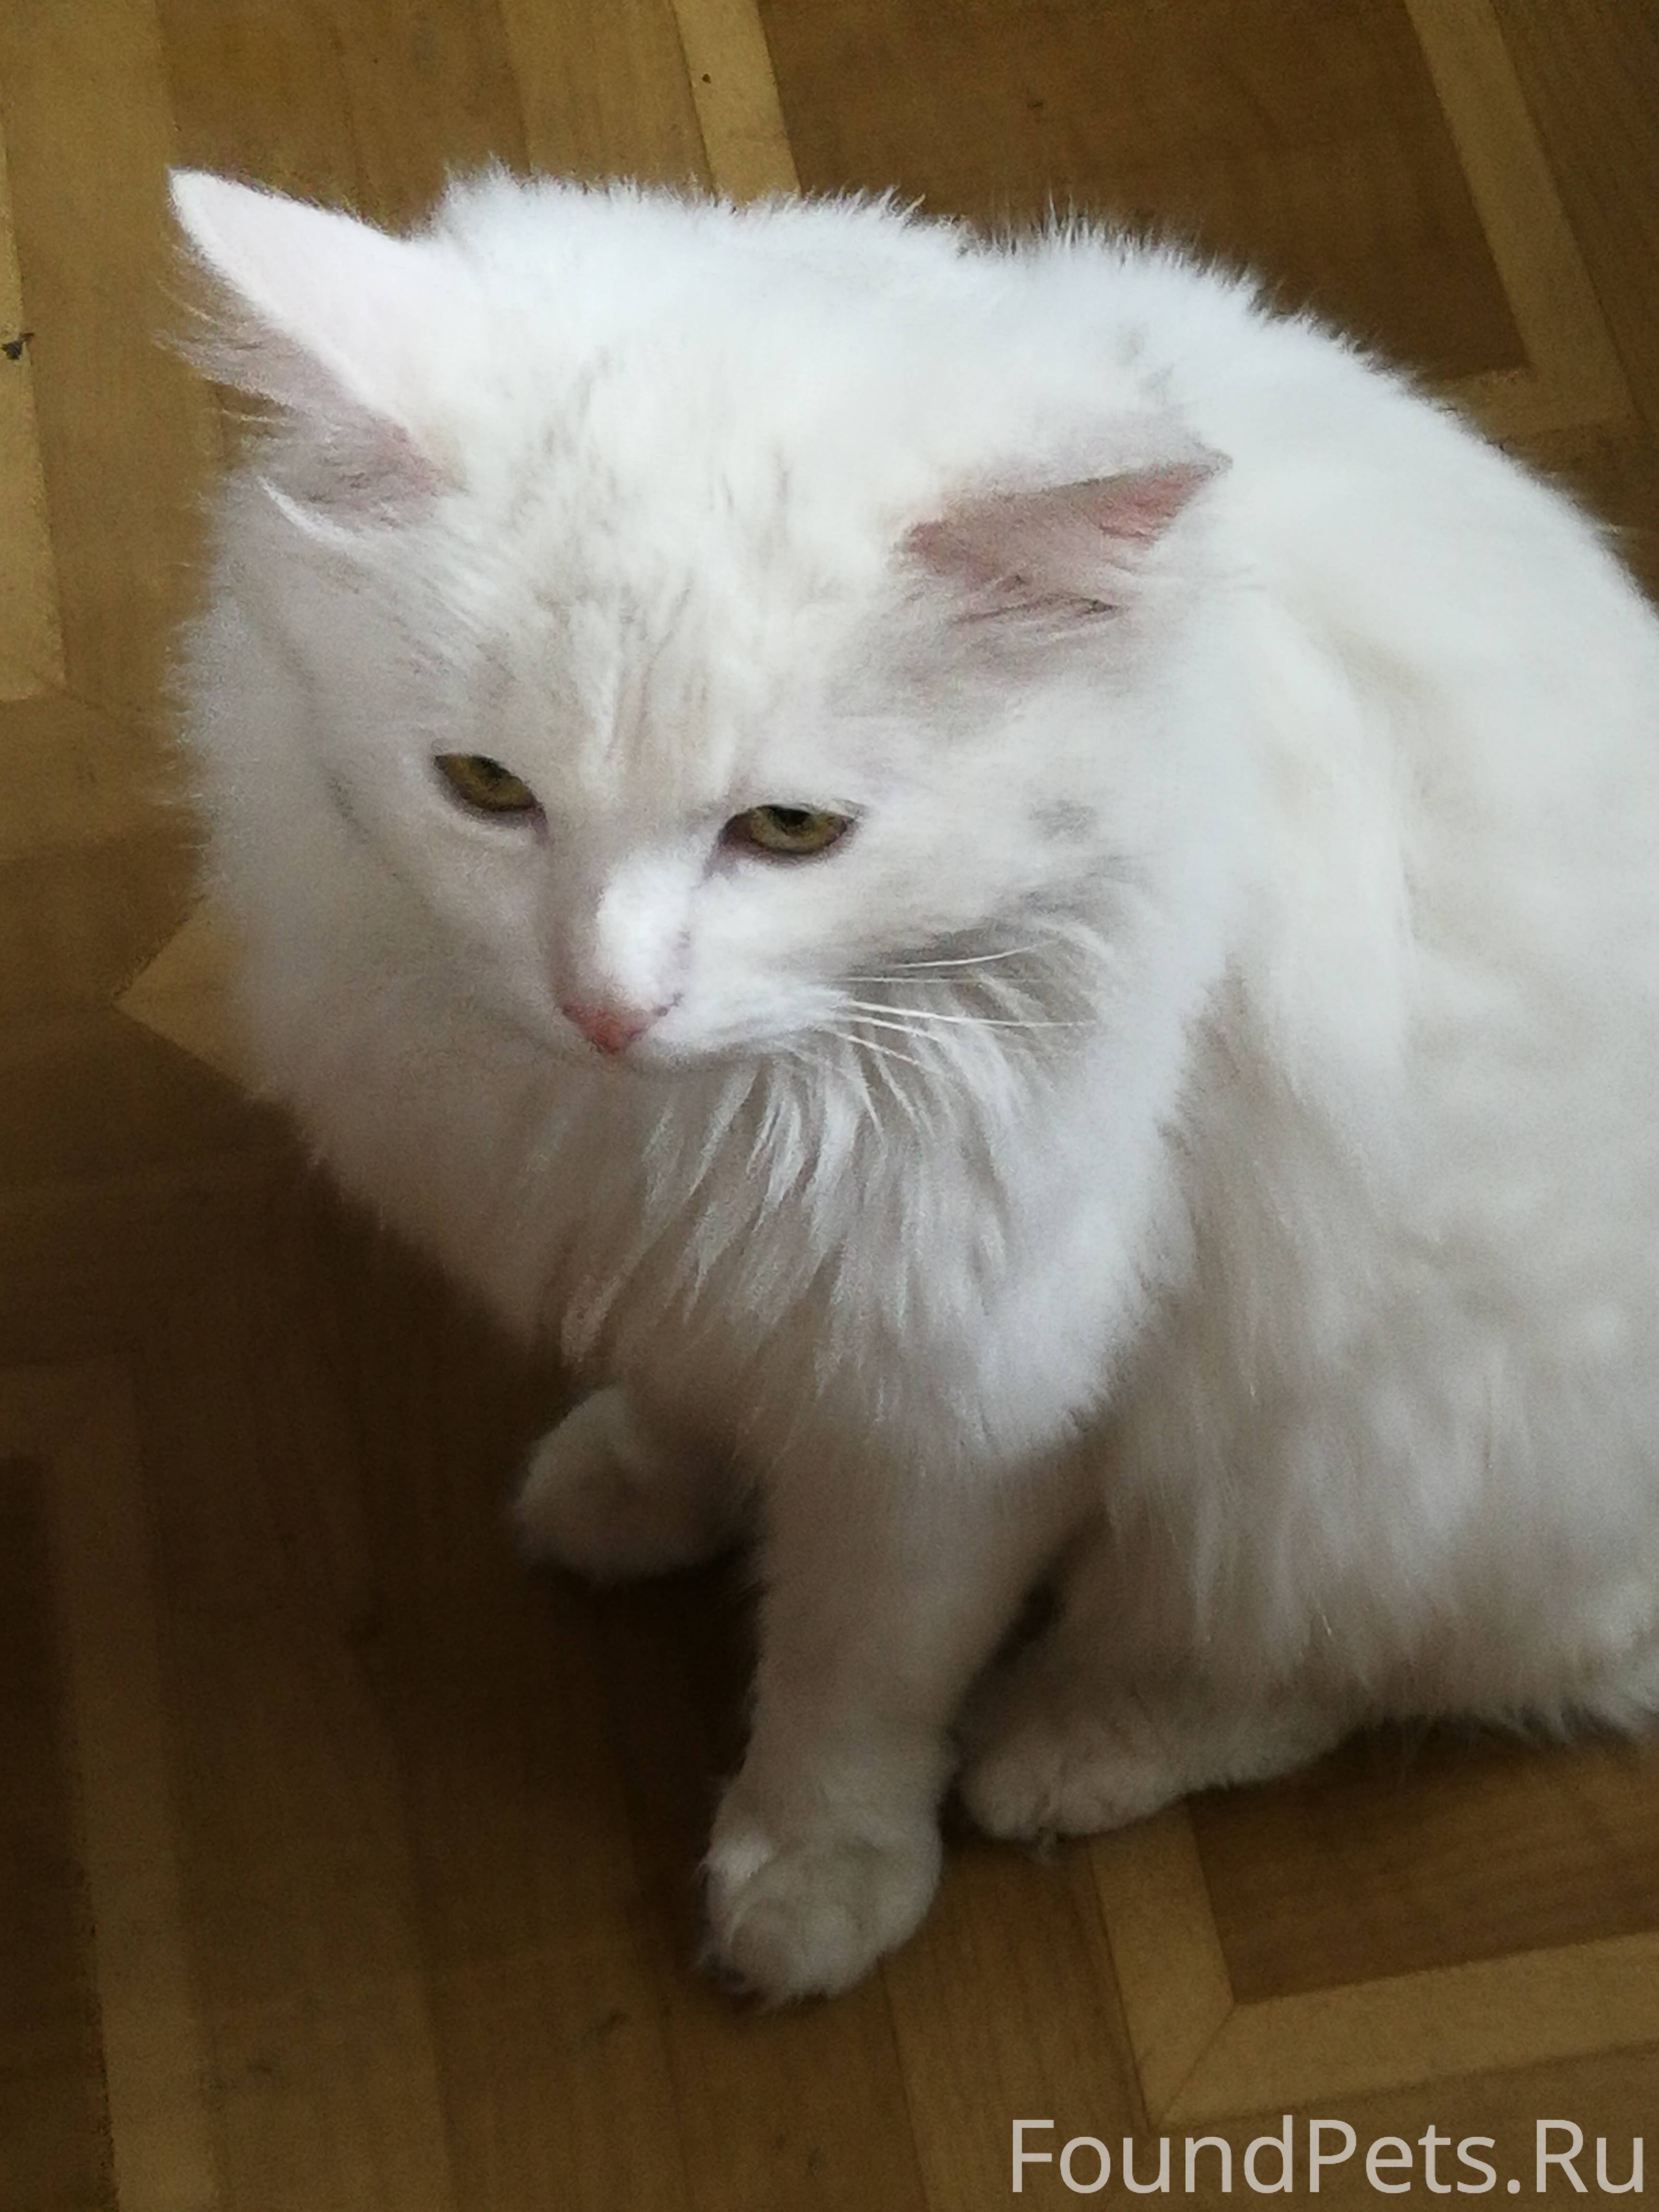 Возьму белую кошку. Найден белый кот. Белый кот потеряшка. Найден белый кот Москва. Потеряшка белая.